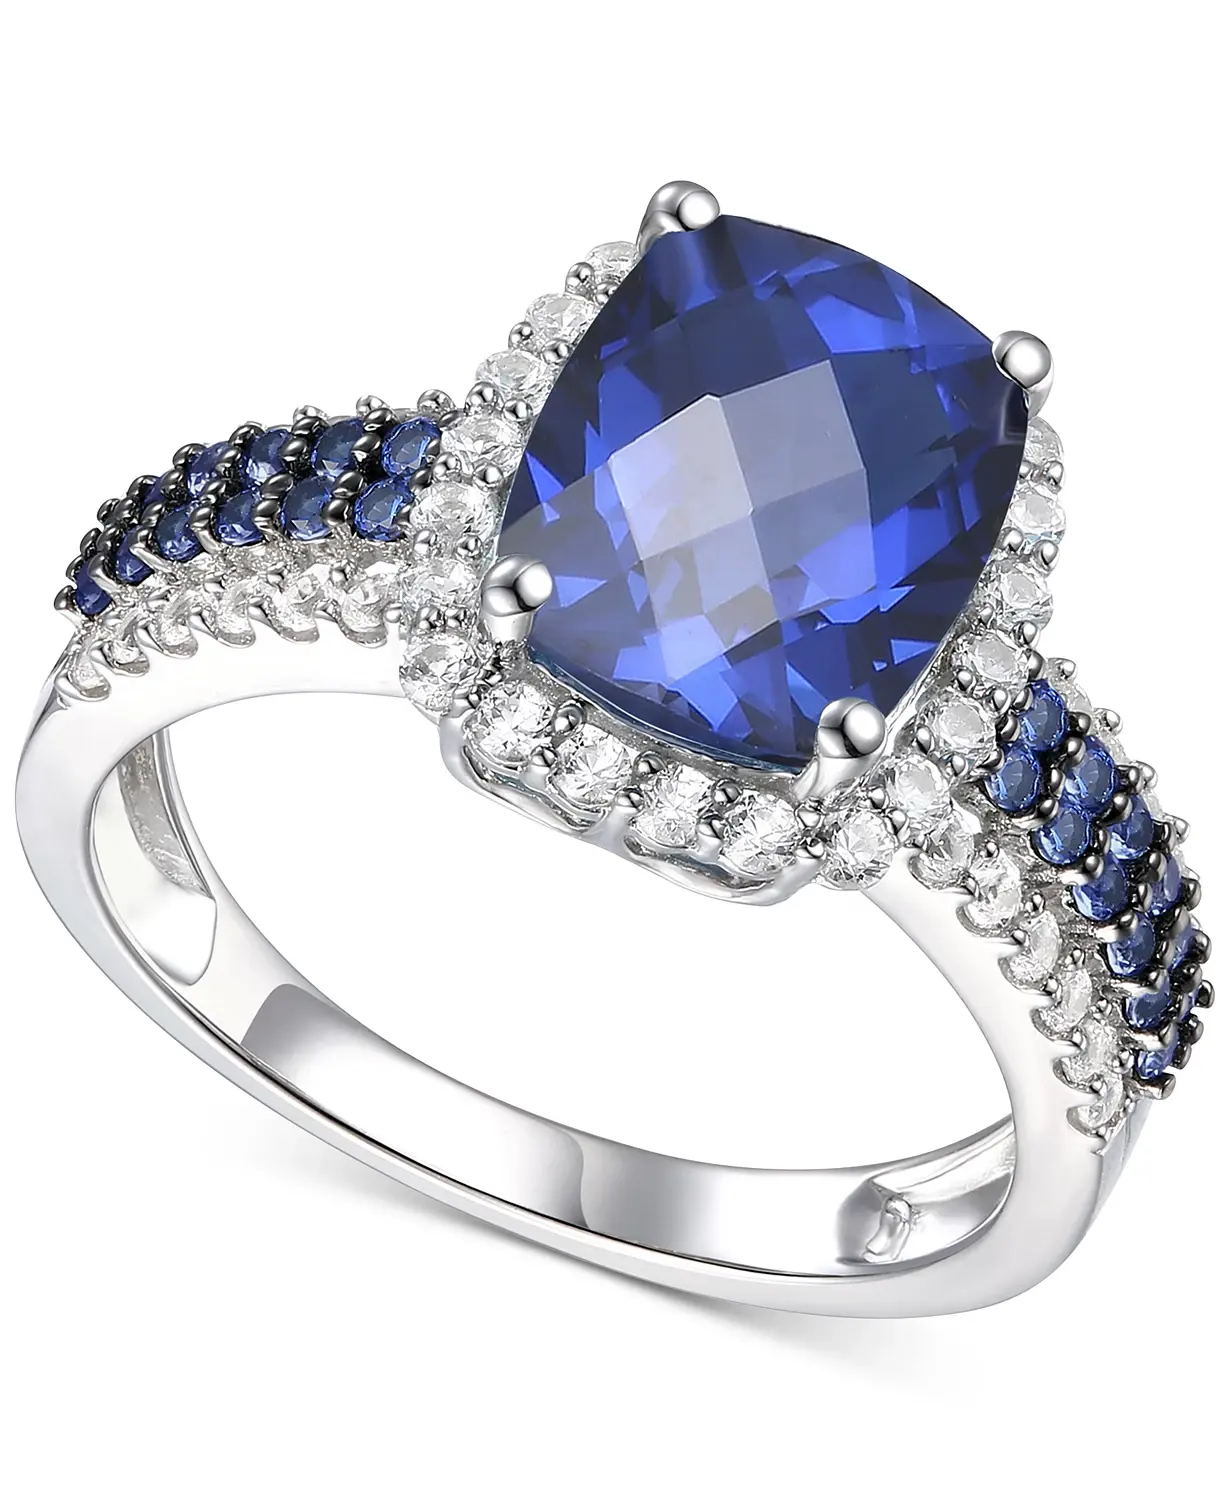 Joias finas anel prata 925, azul safira anel de noivado